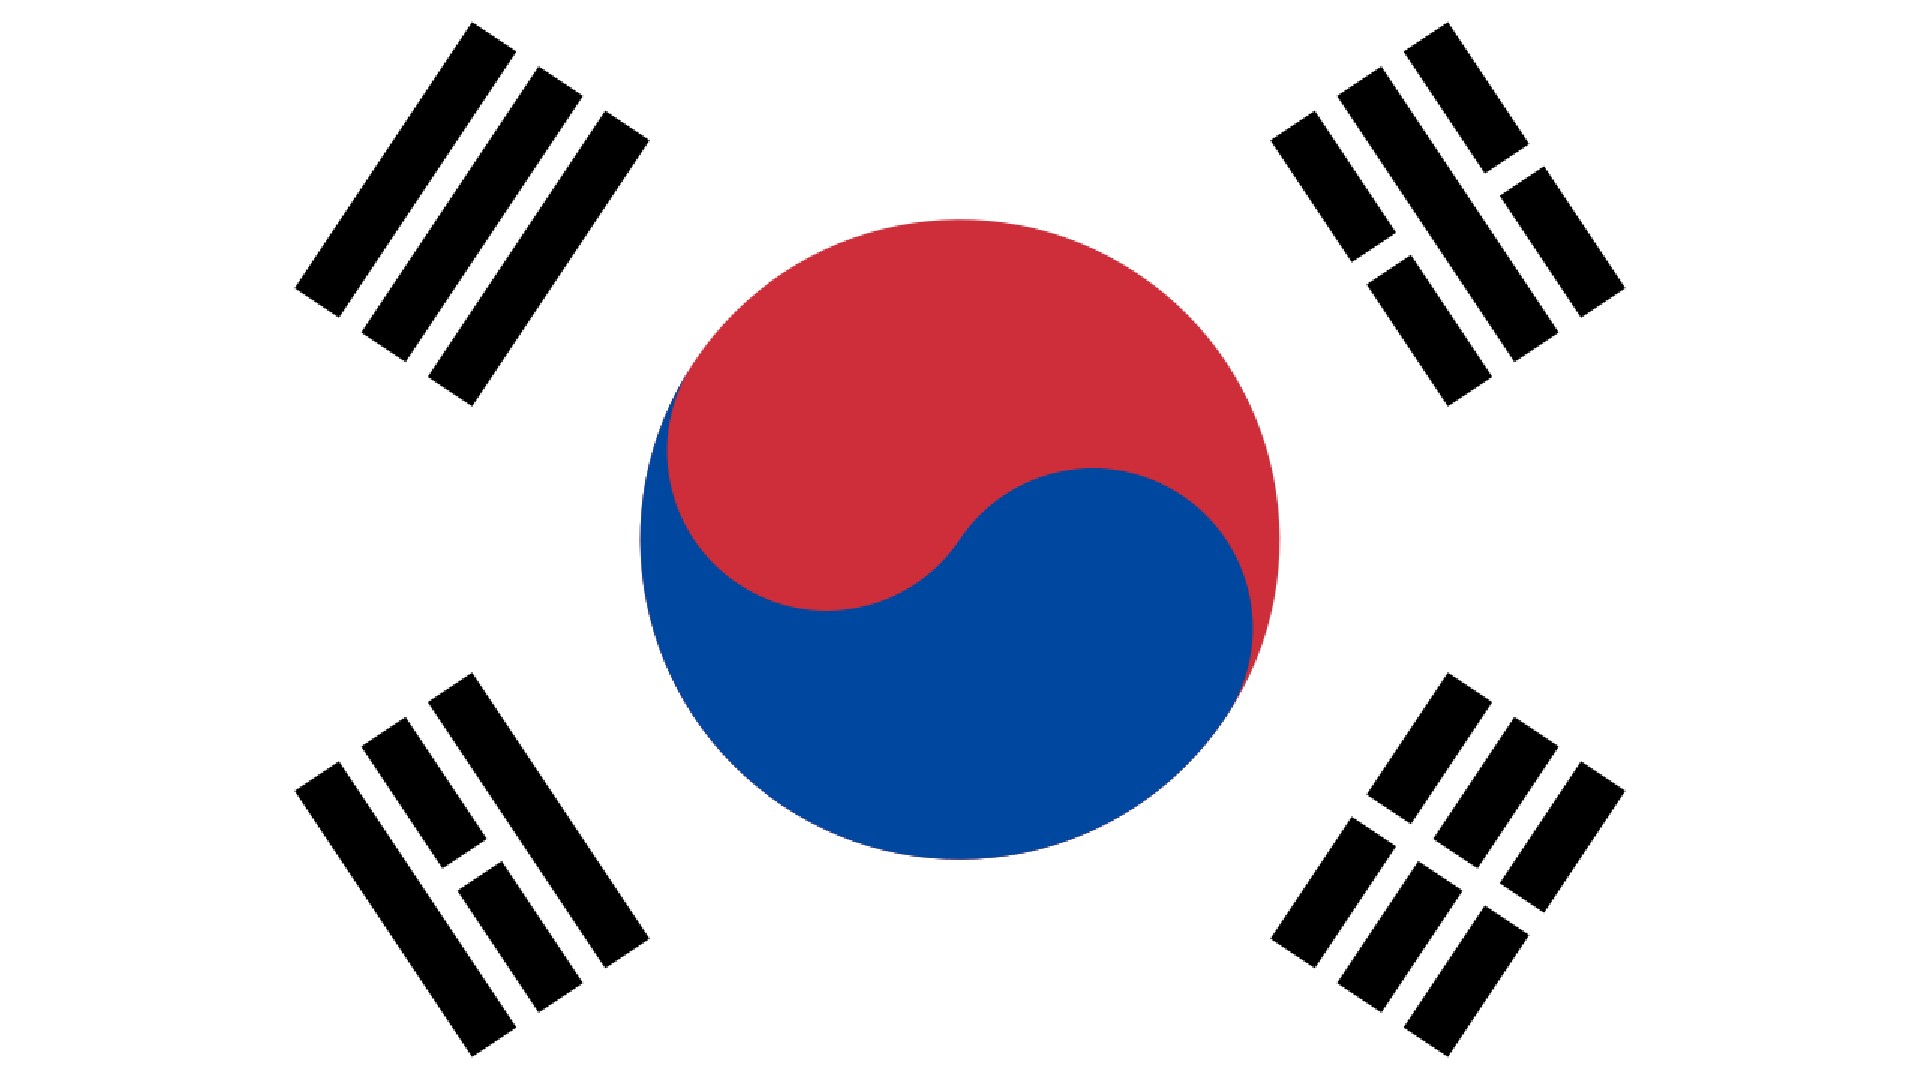 An image of the flag of South Korea